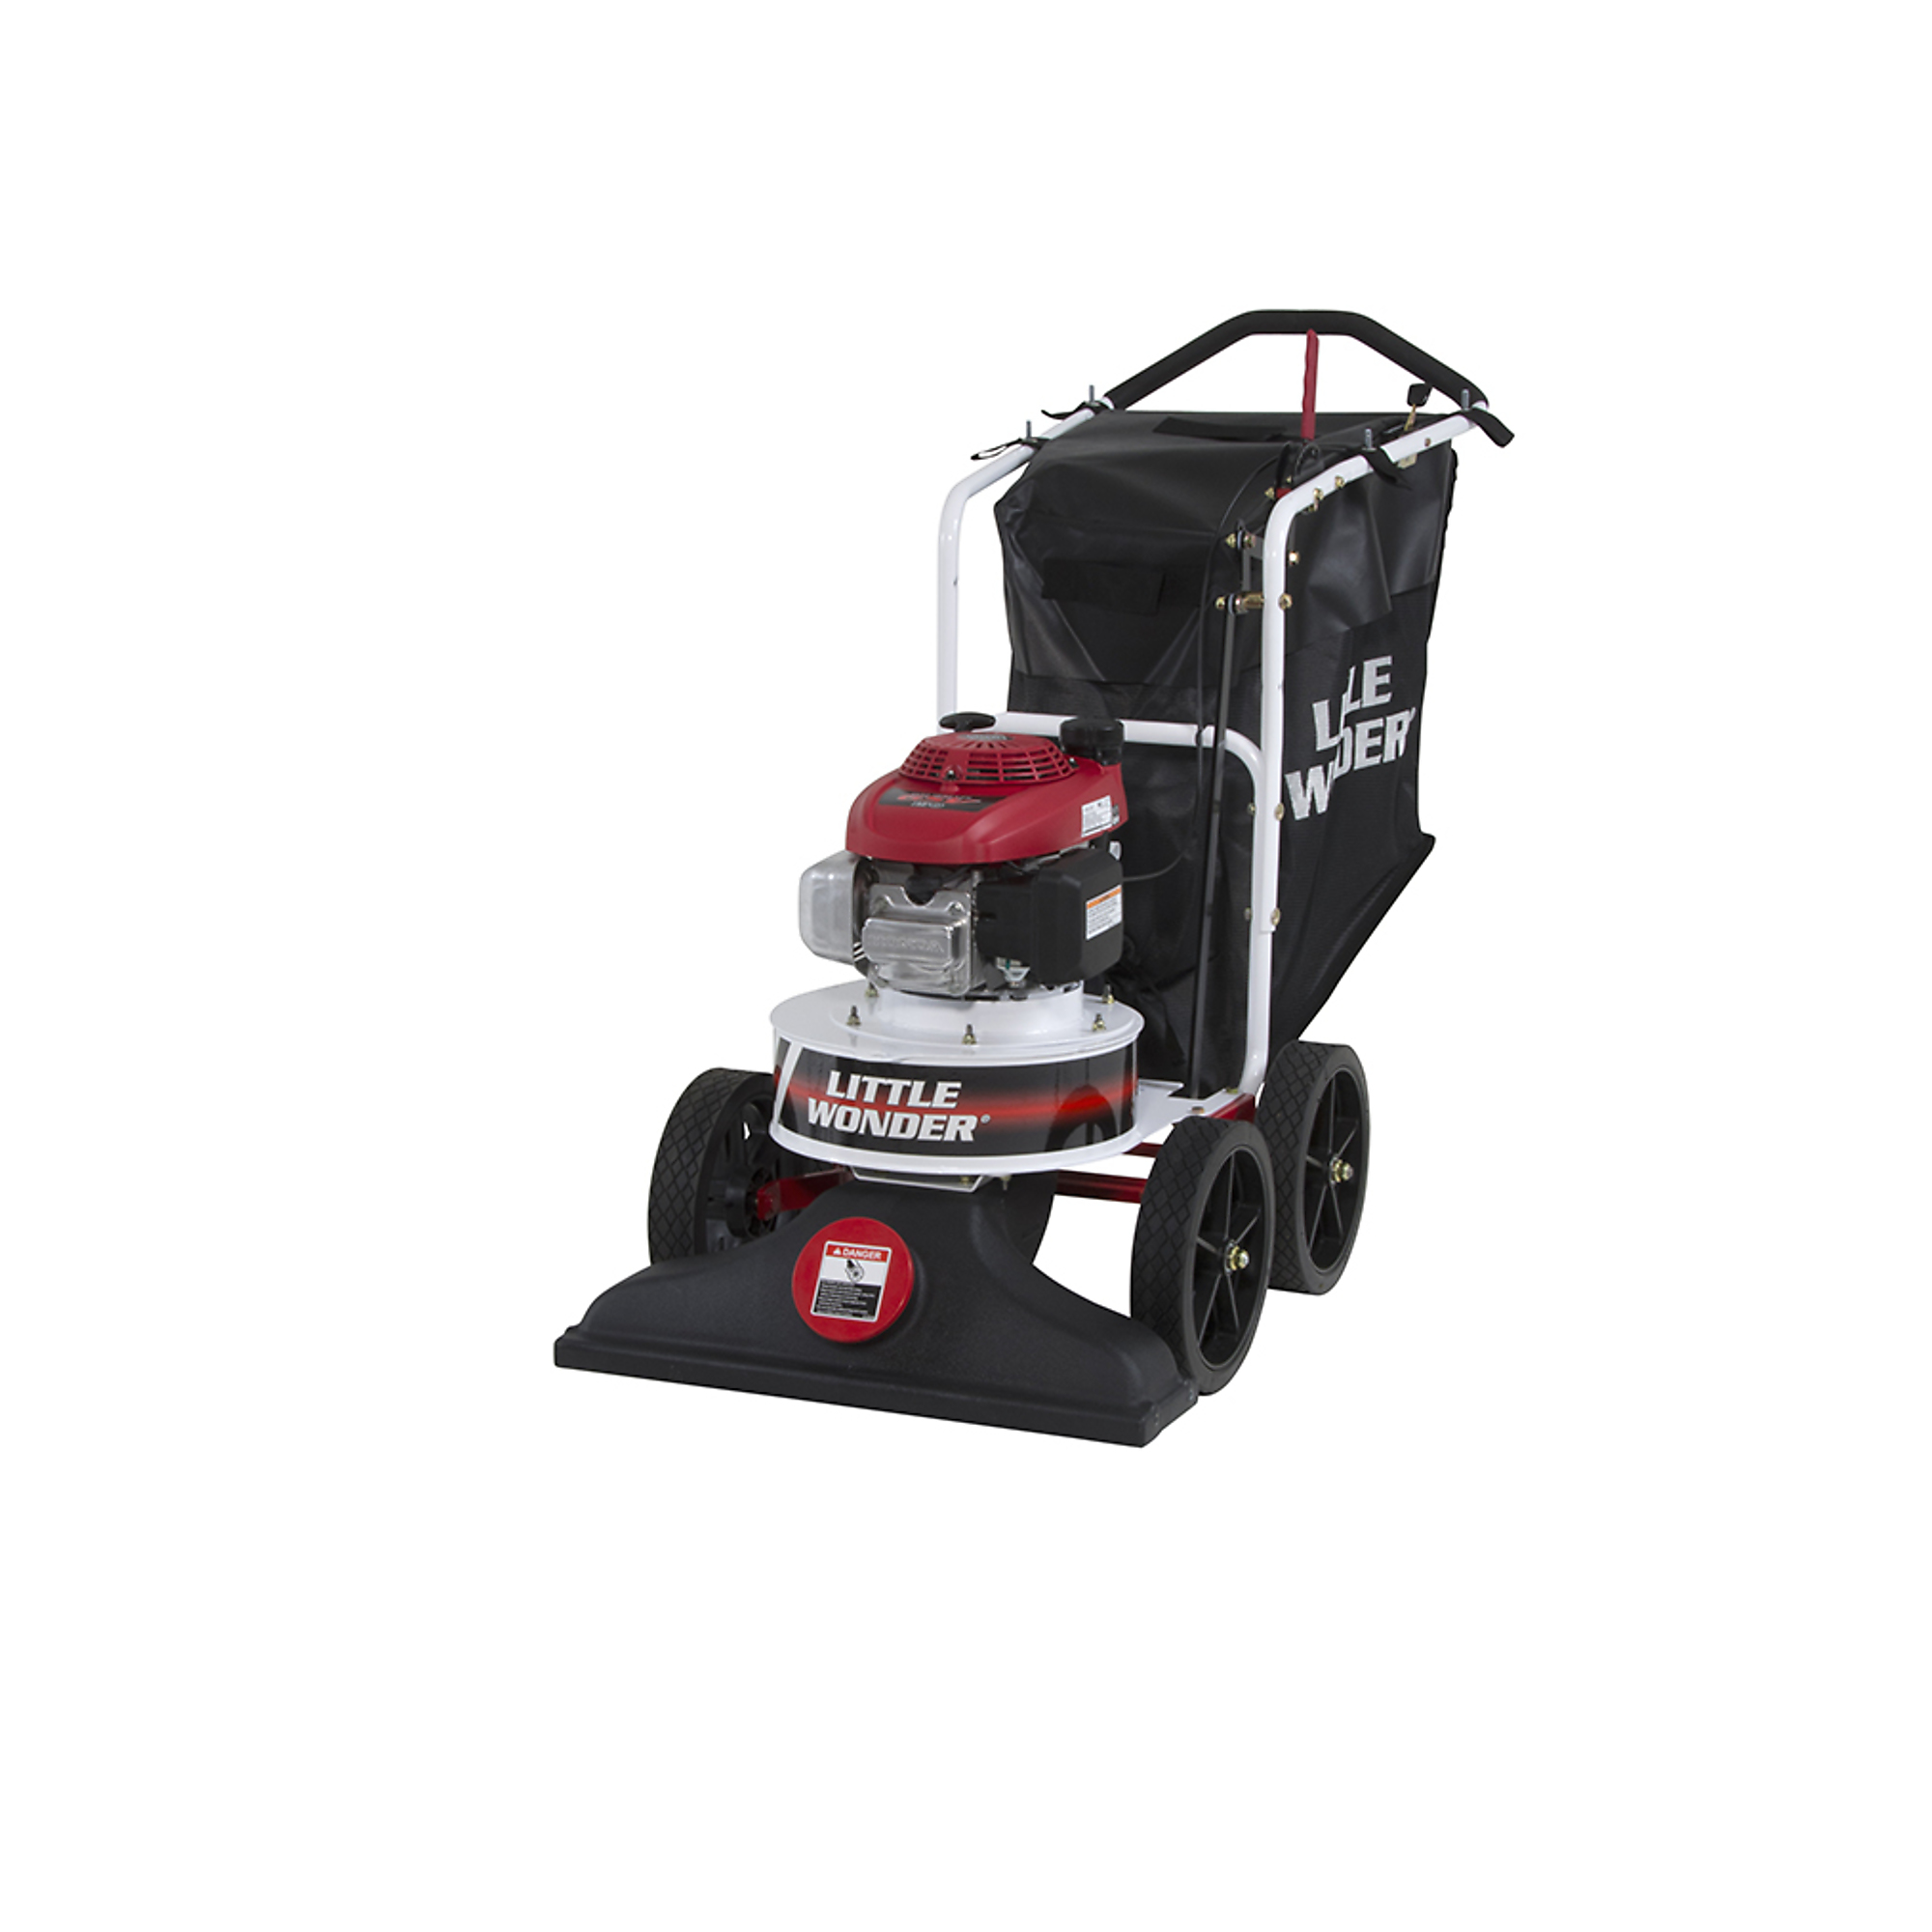 Little Wonder (27.5) 190cc Pro VAC SI Lawn/Litter Vacuum